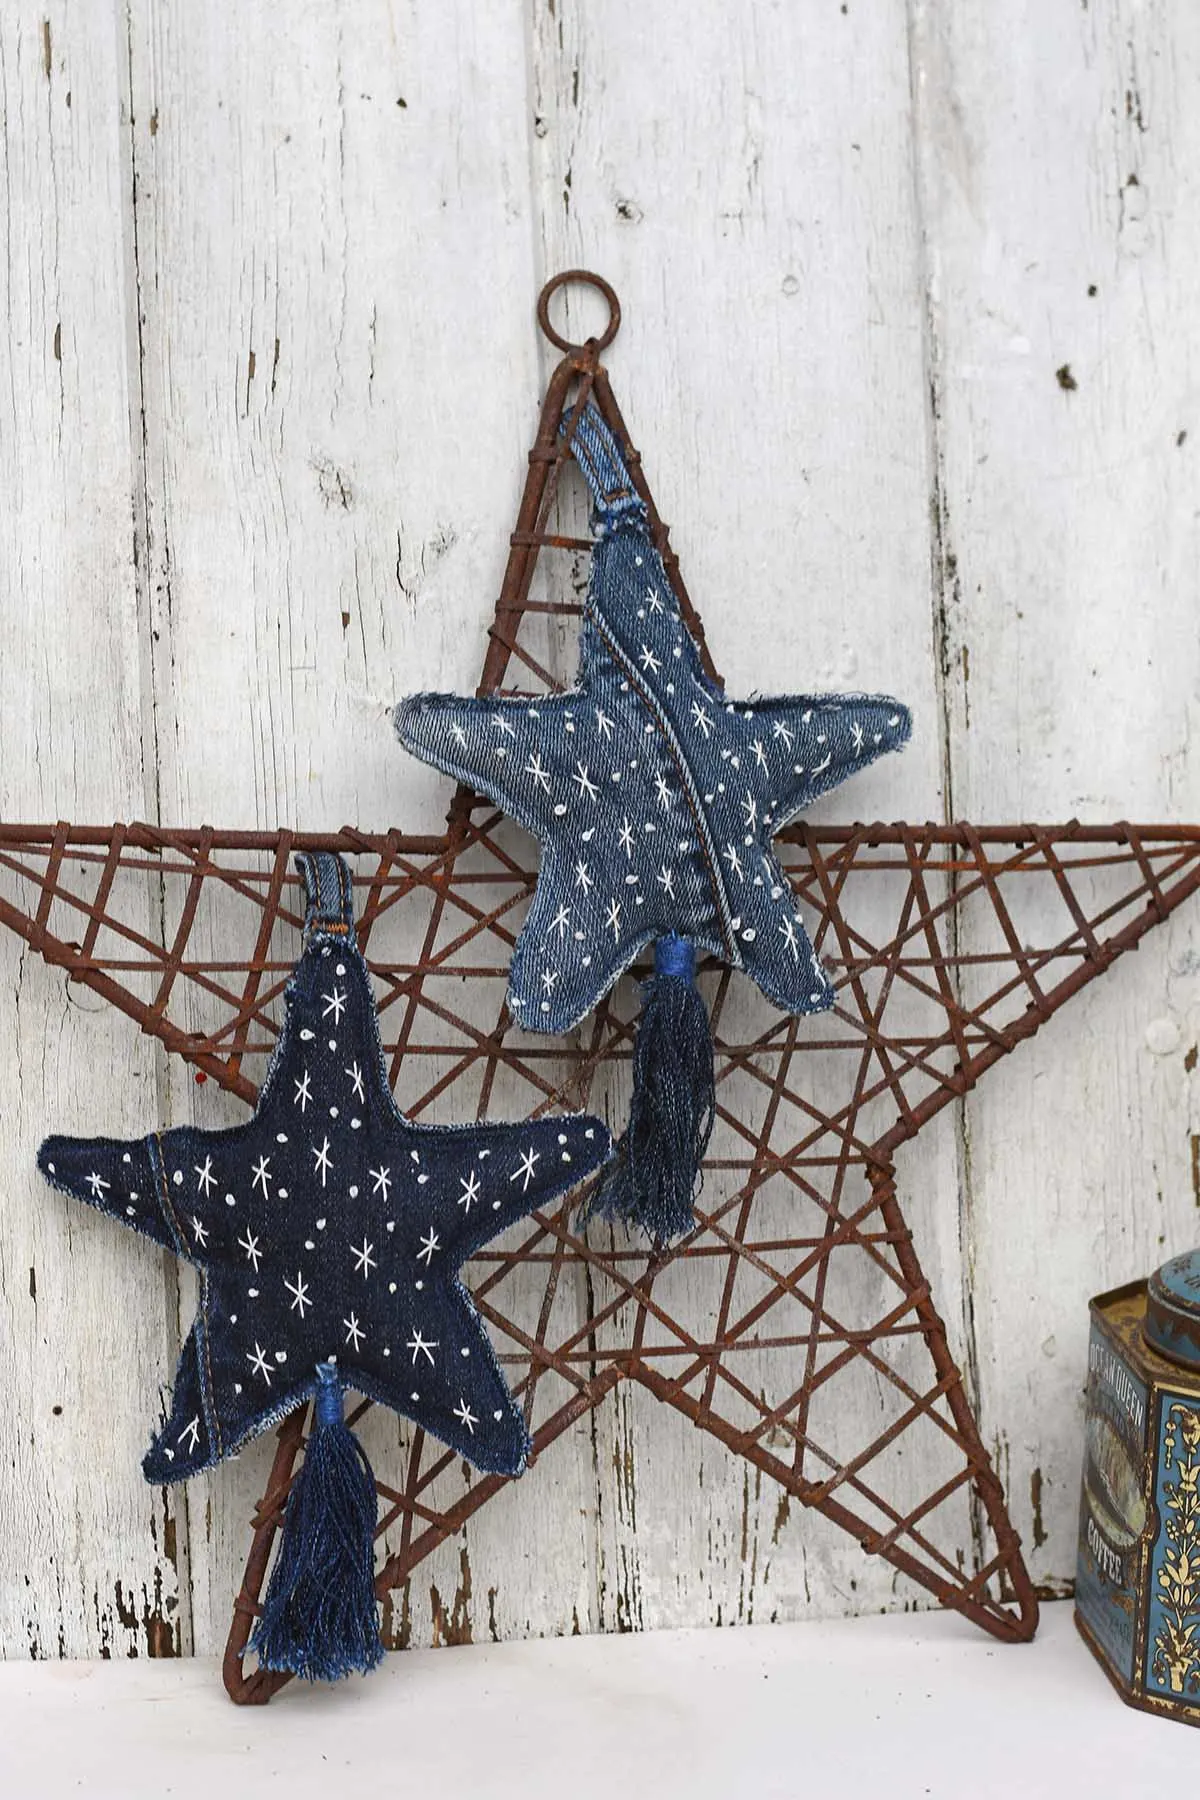 Stitched fabric star ornaments in denim